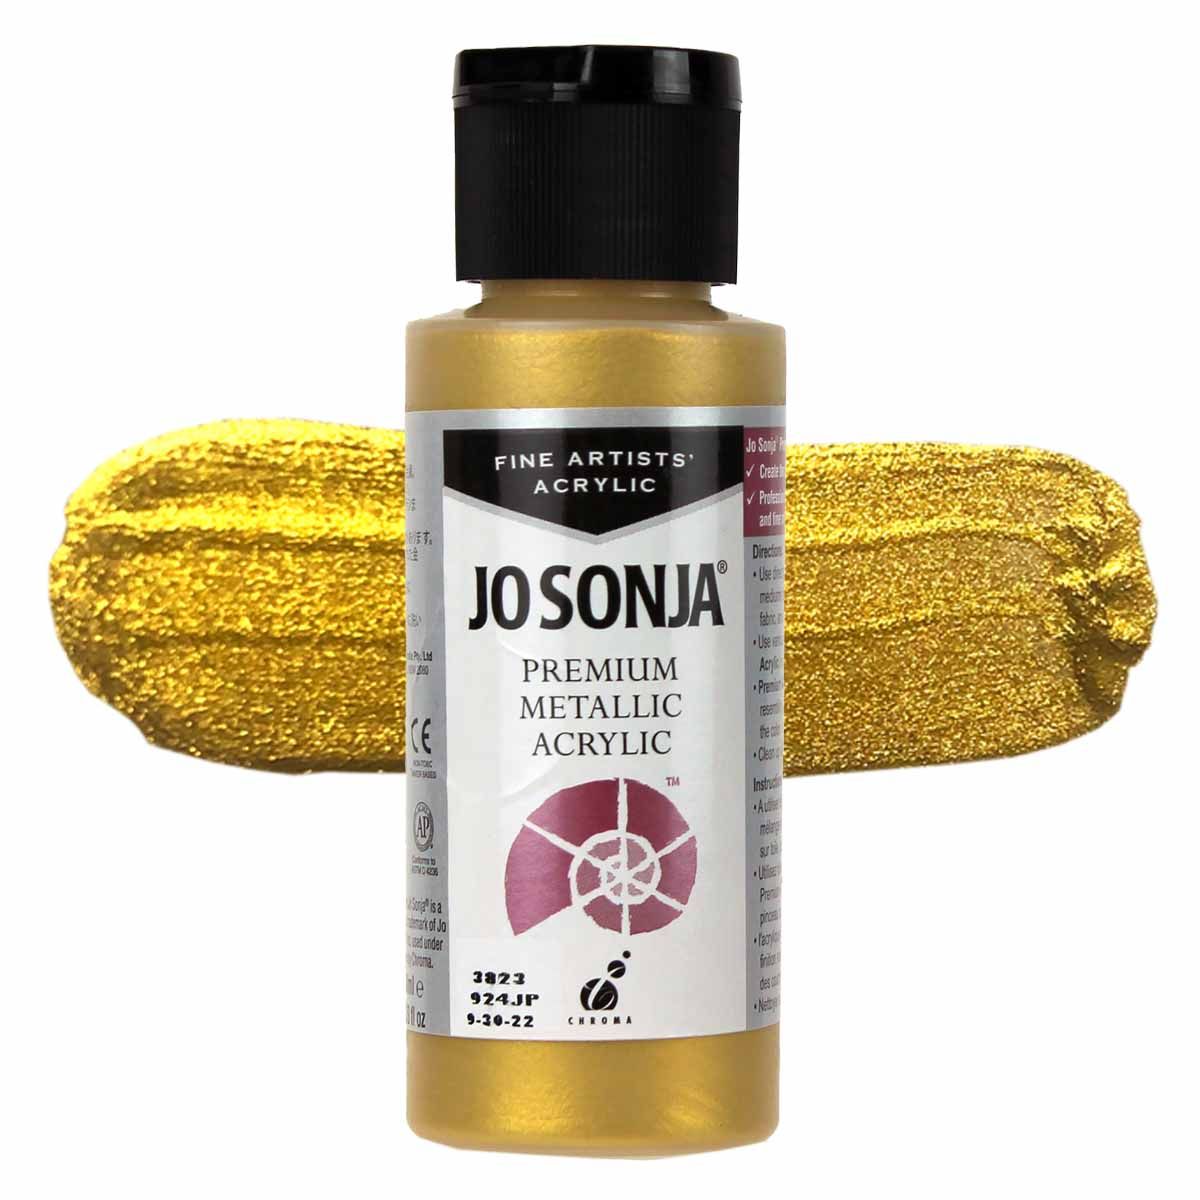 Jo Sonja's Artists' Acrylic Metallic Lustrous Gold, 2oz